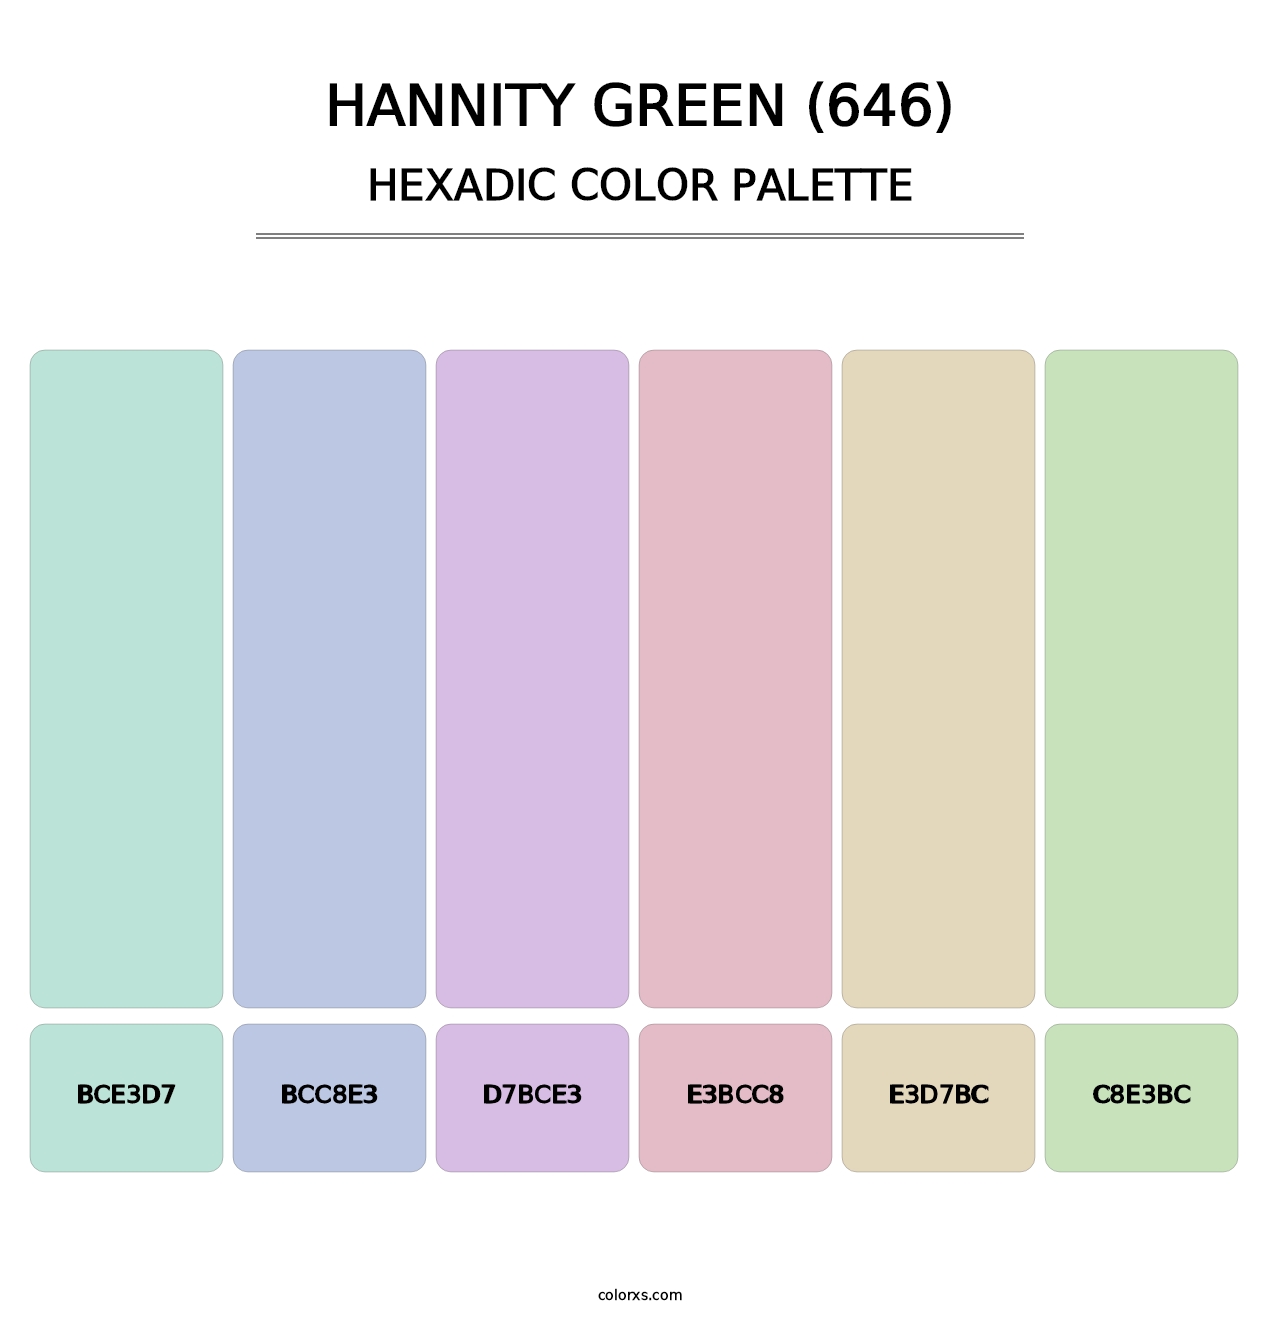 Hannity Green (646) - Hexadic Color Palette